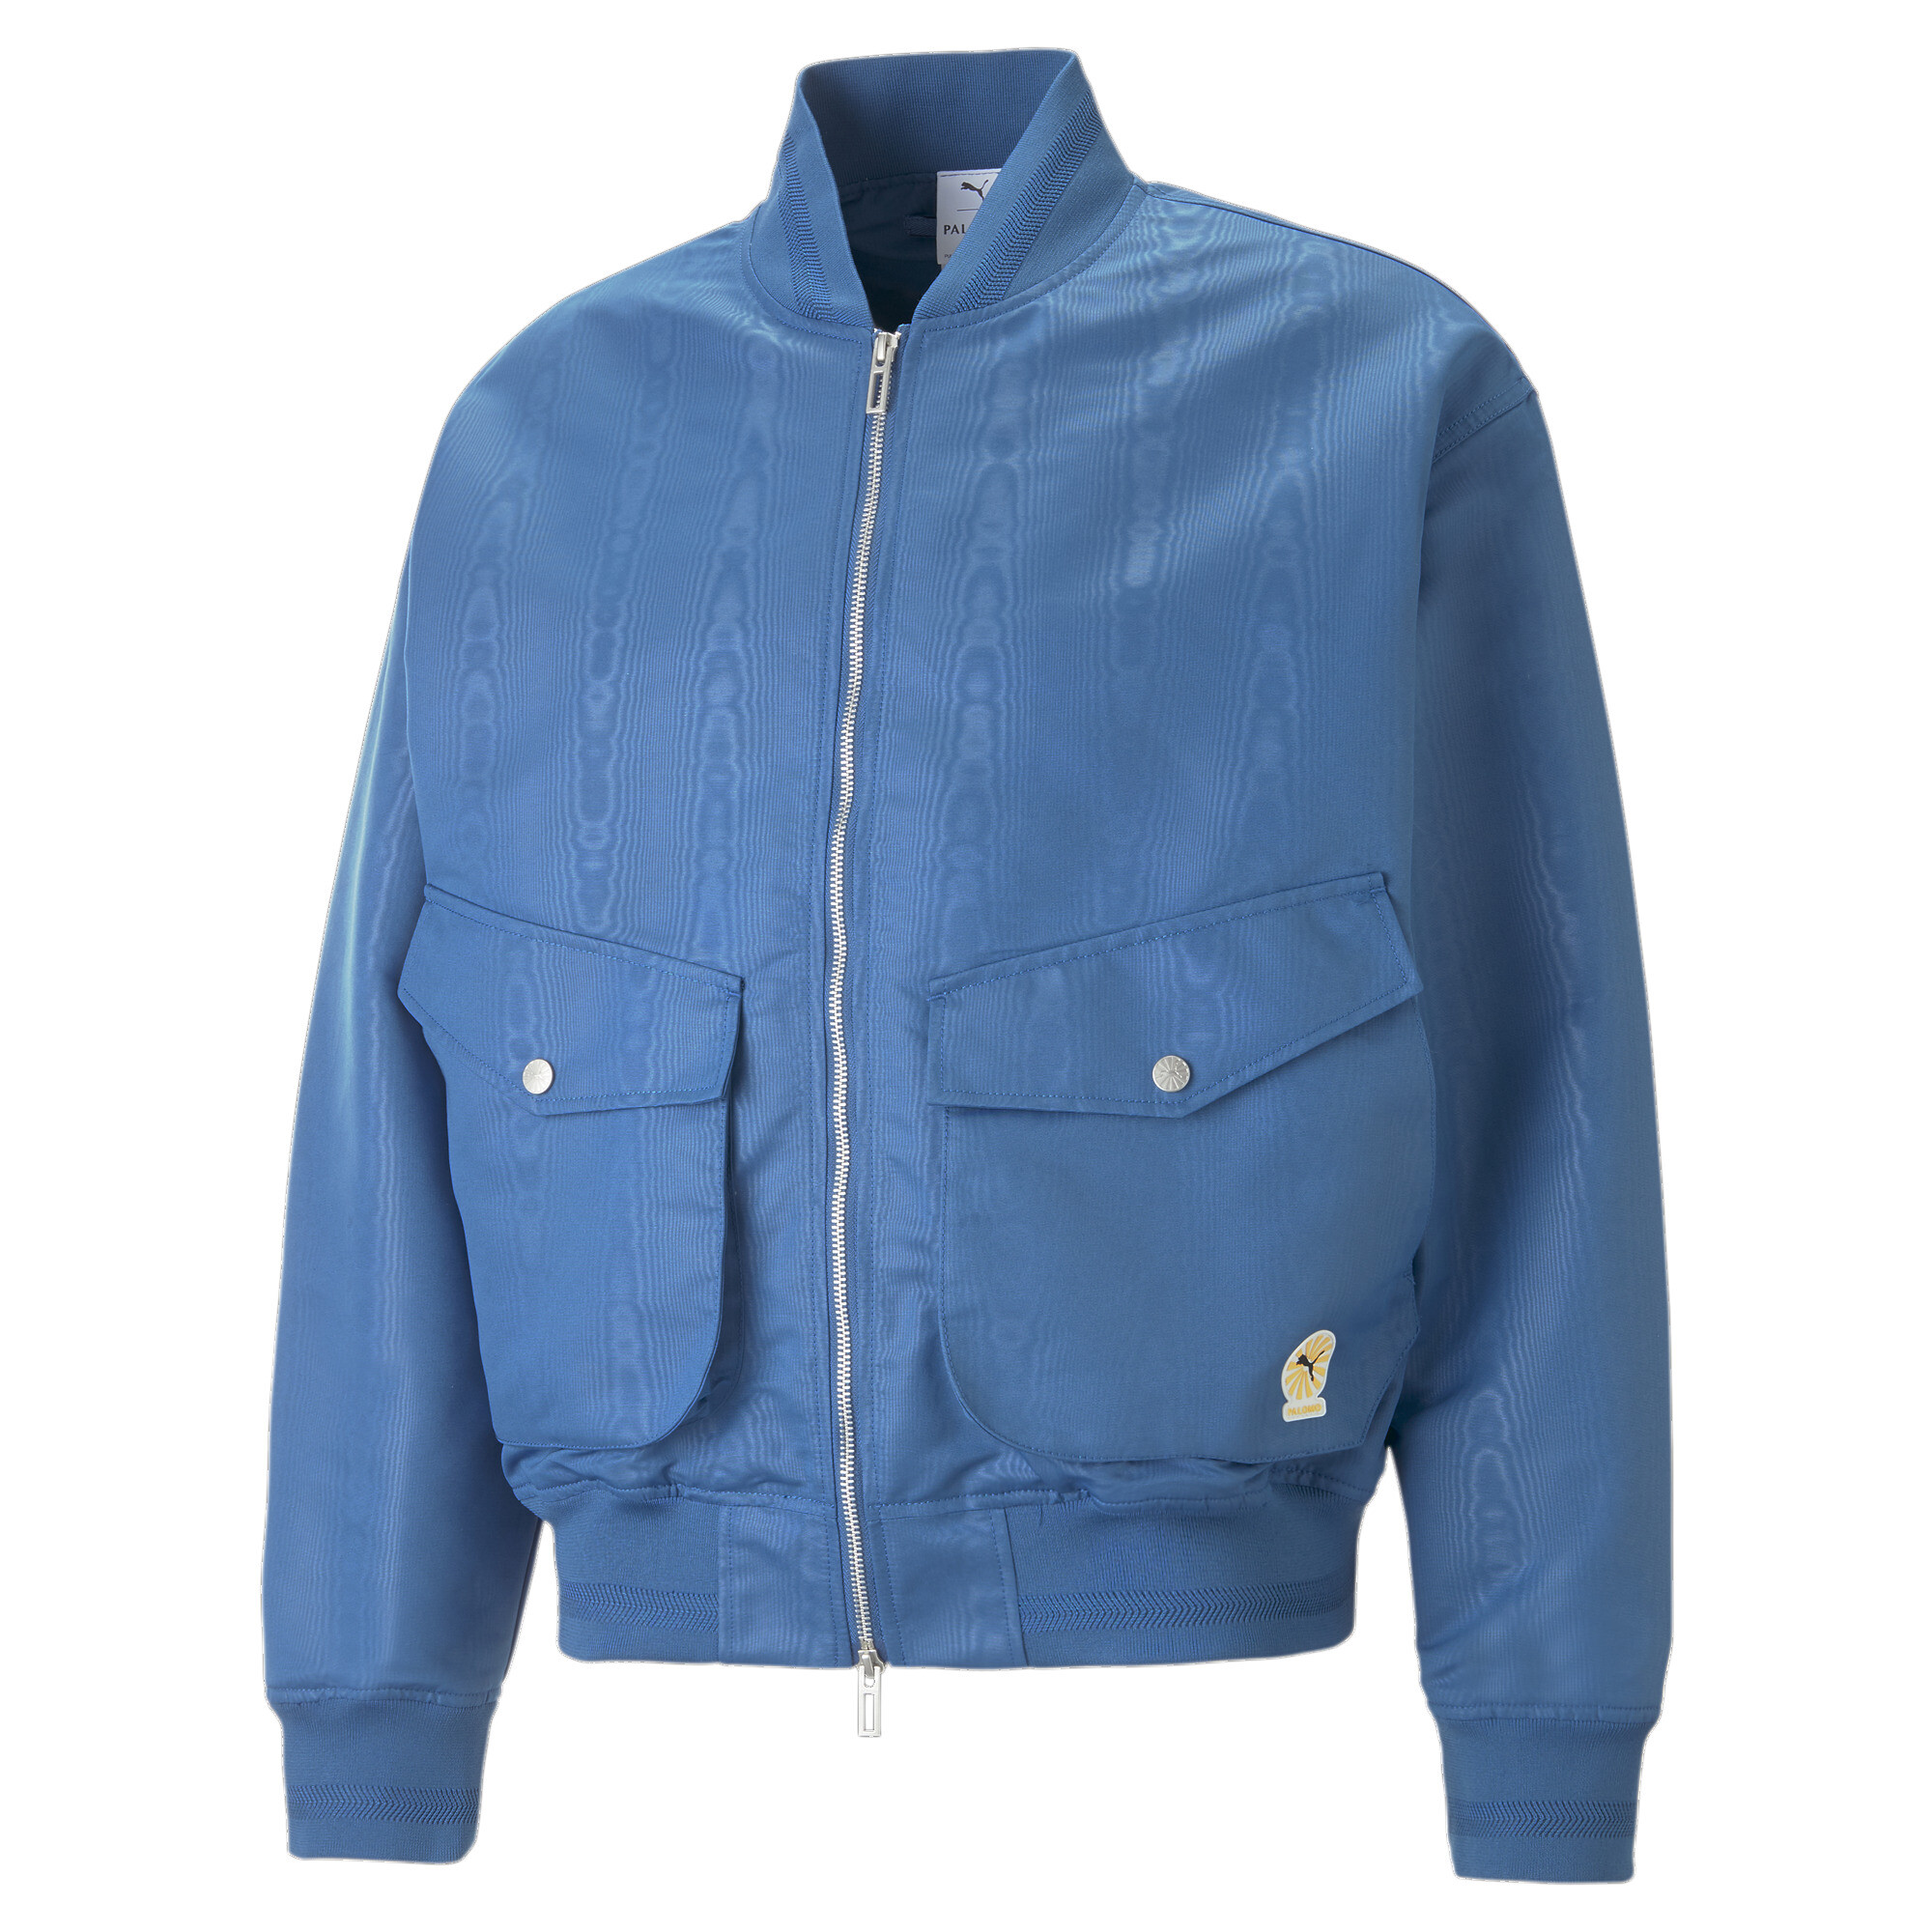 Men's PUMA X PALOMO Jacket In Blue, Size Medium